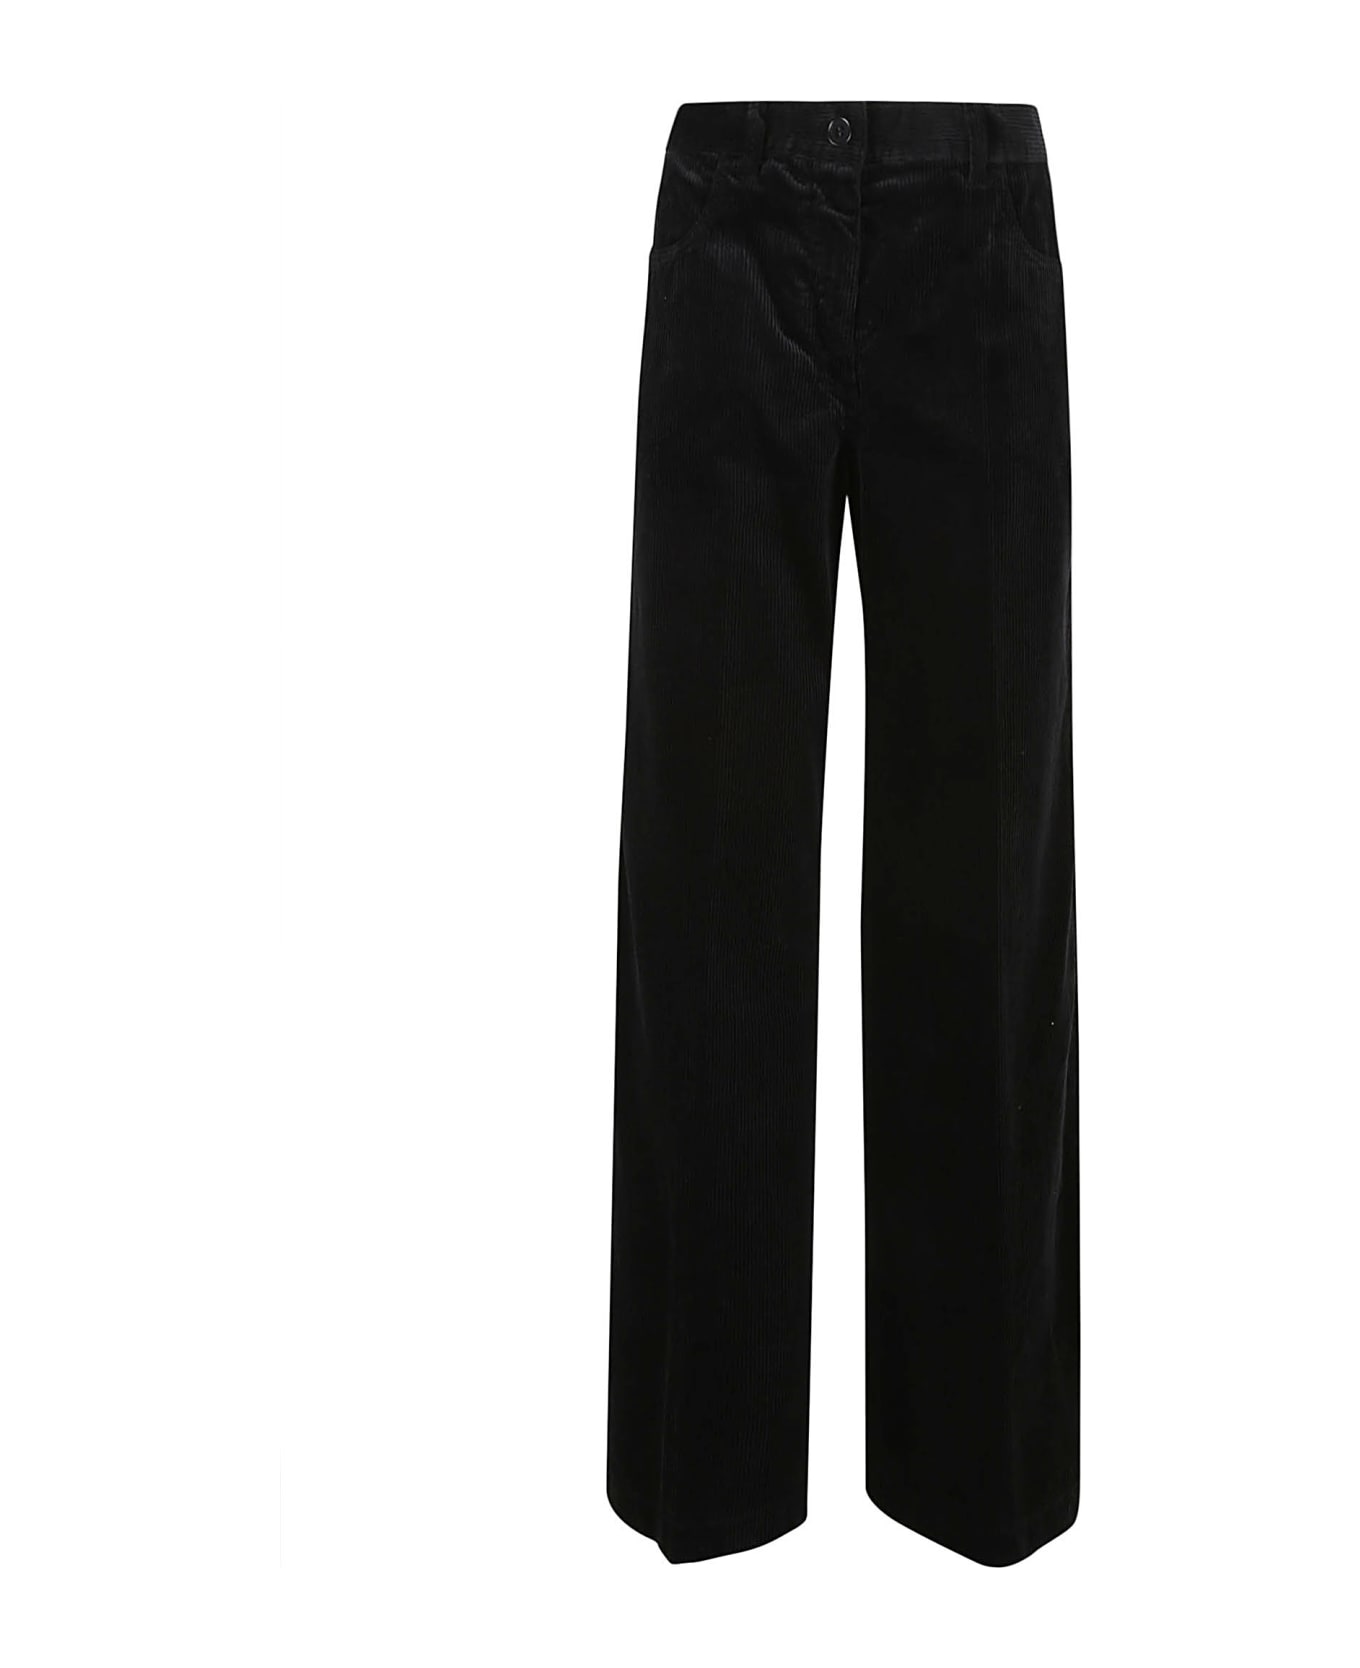 Aspesi Pantalone Mod.0156 - Black